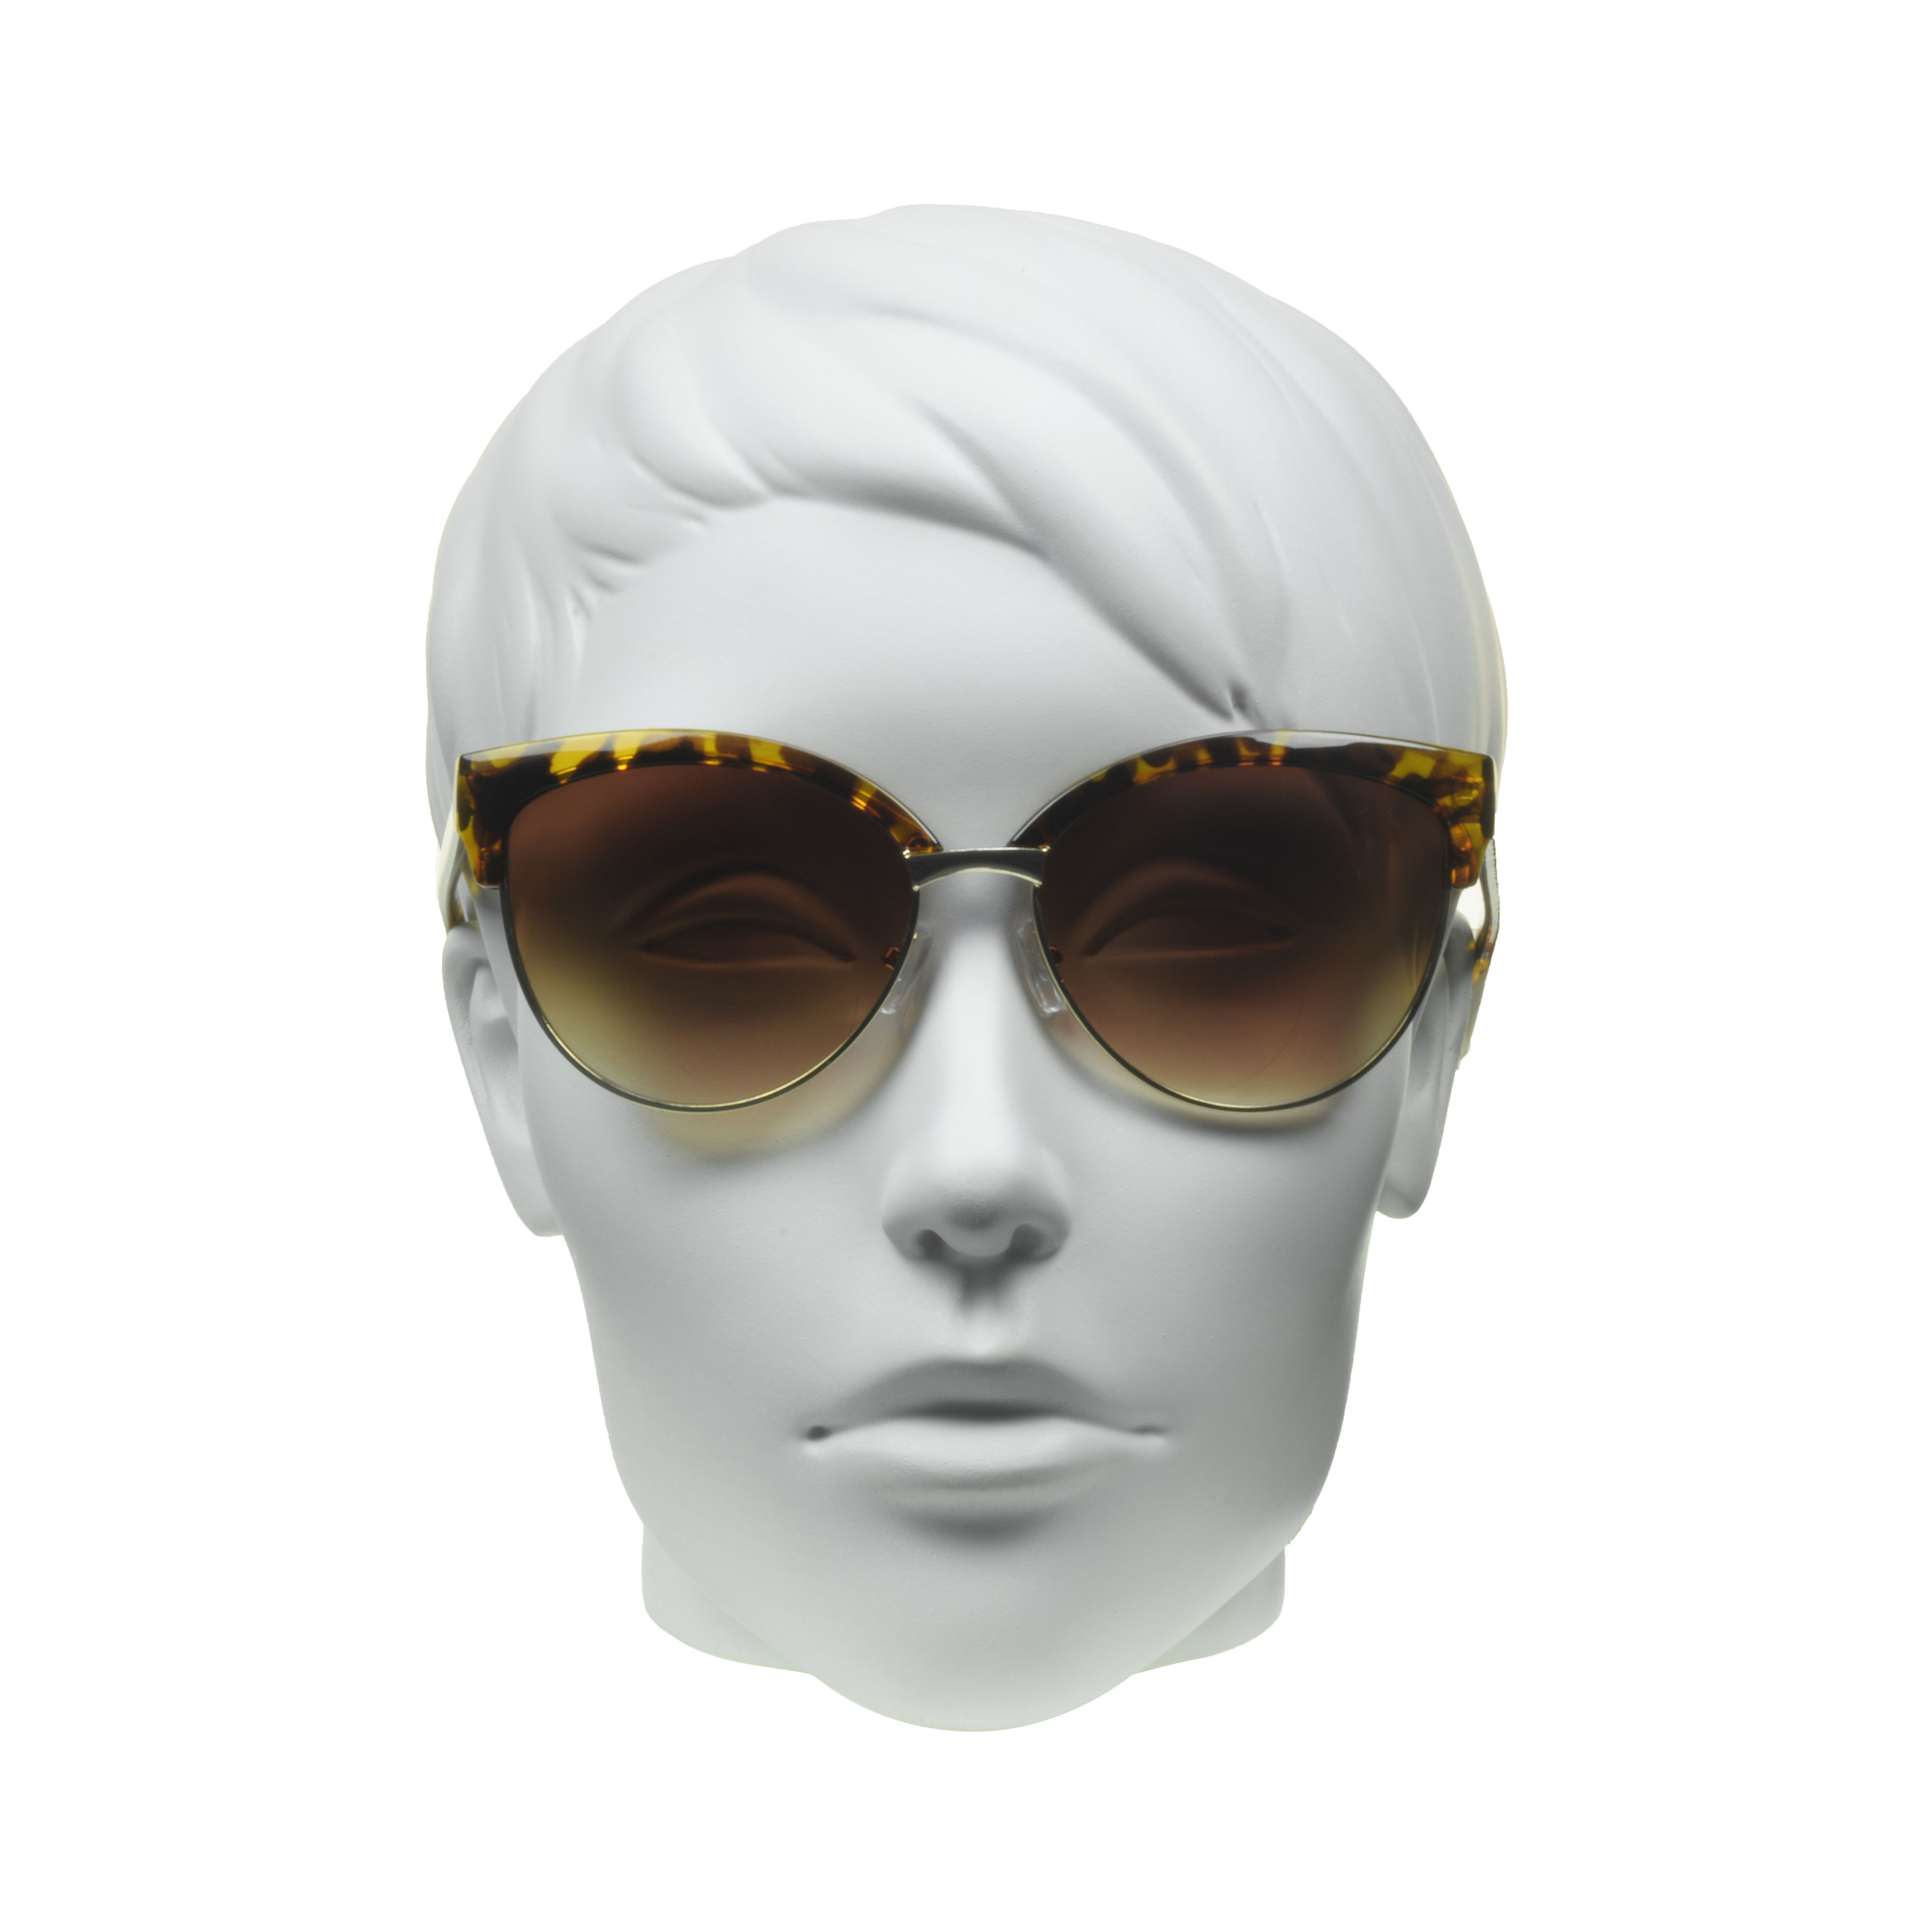 proSPORT Women Bifocal Reading Cateye Fashion Horn Rim Sunglasses Tortoise Gold Frame Brown Lens +2.50 - image 3 of 5